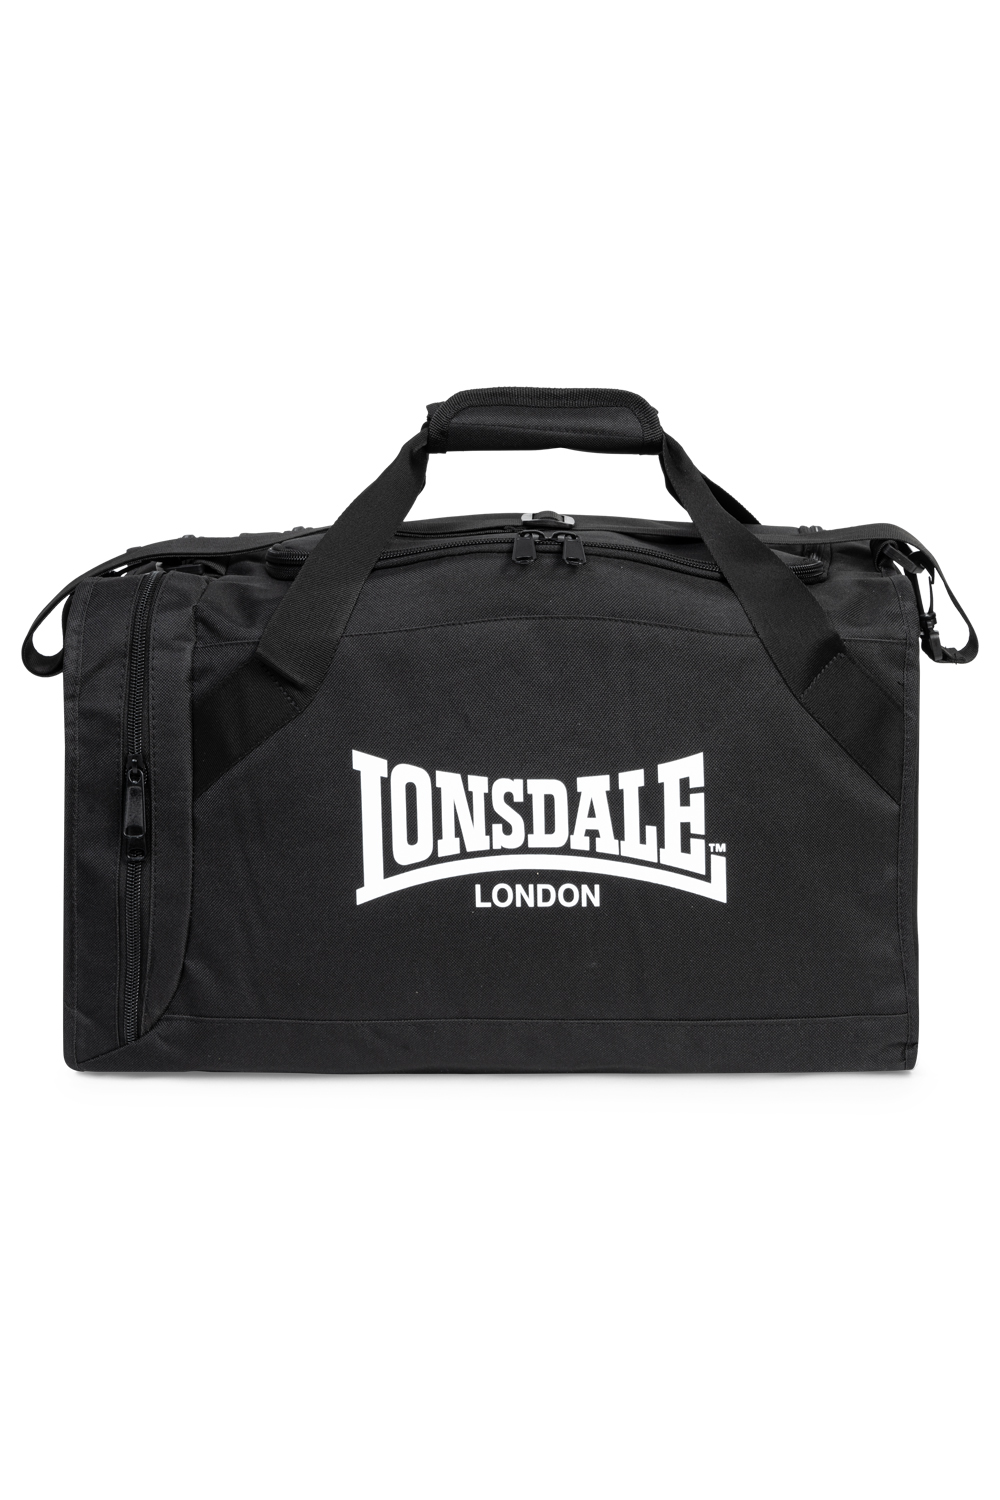 Lonsdale Sport´s bag